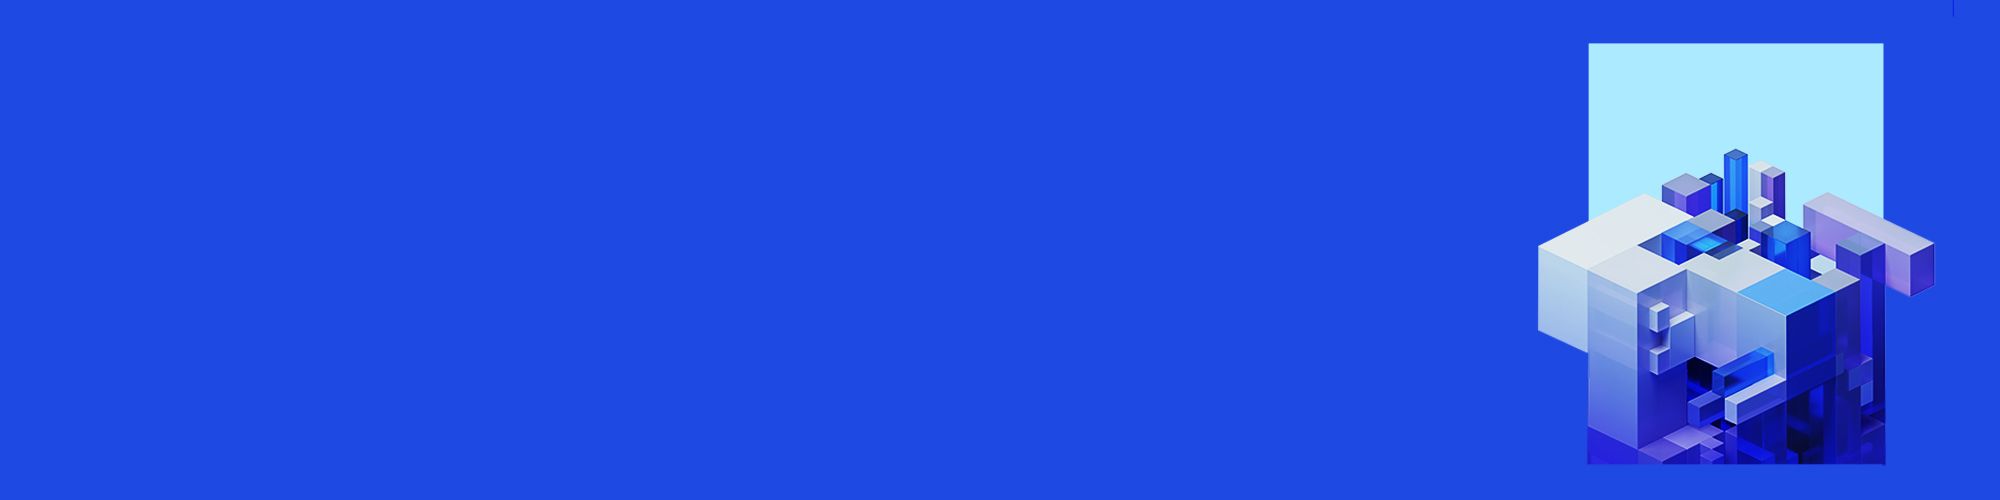 blue-blocks-abstract-banner